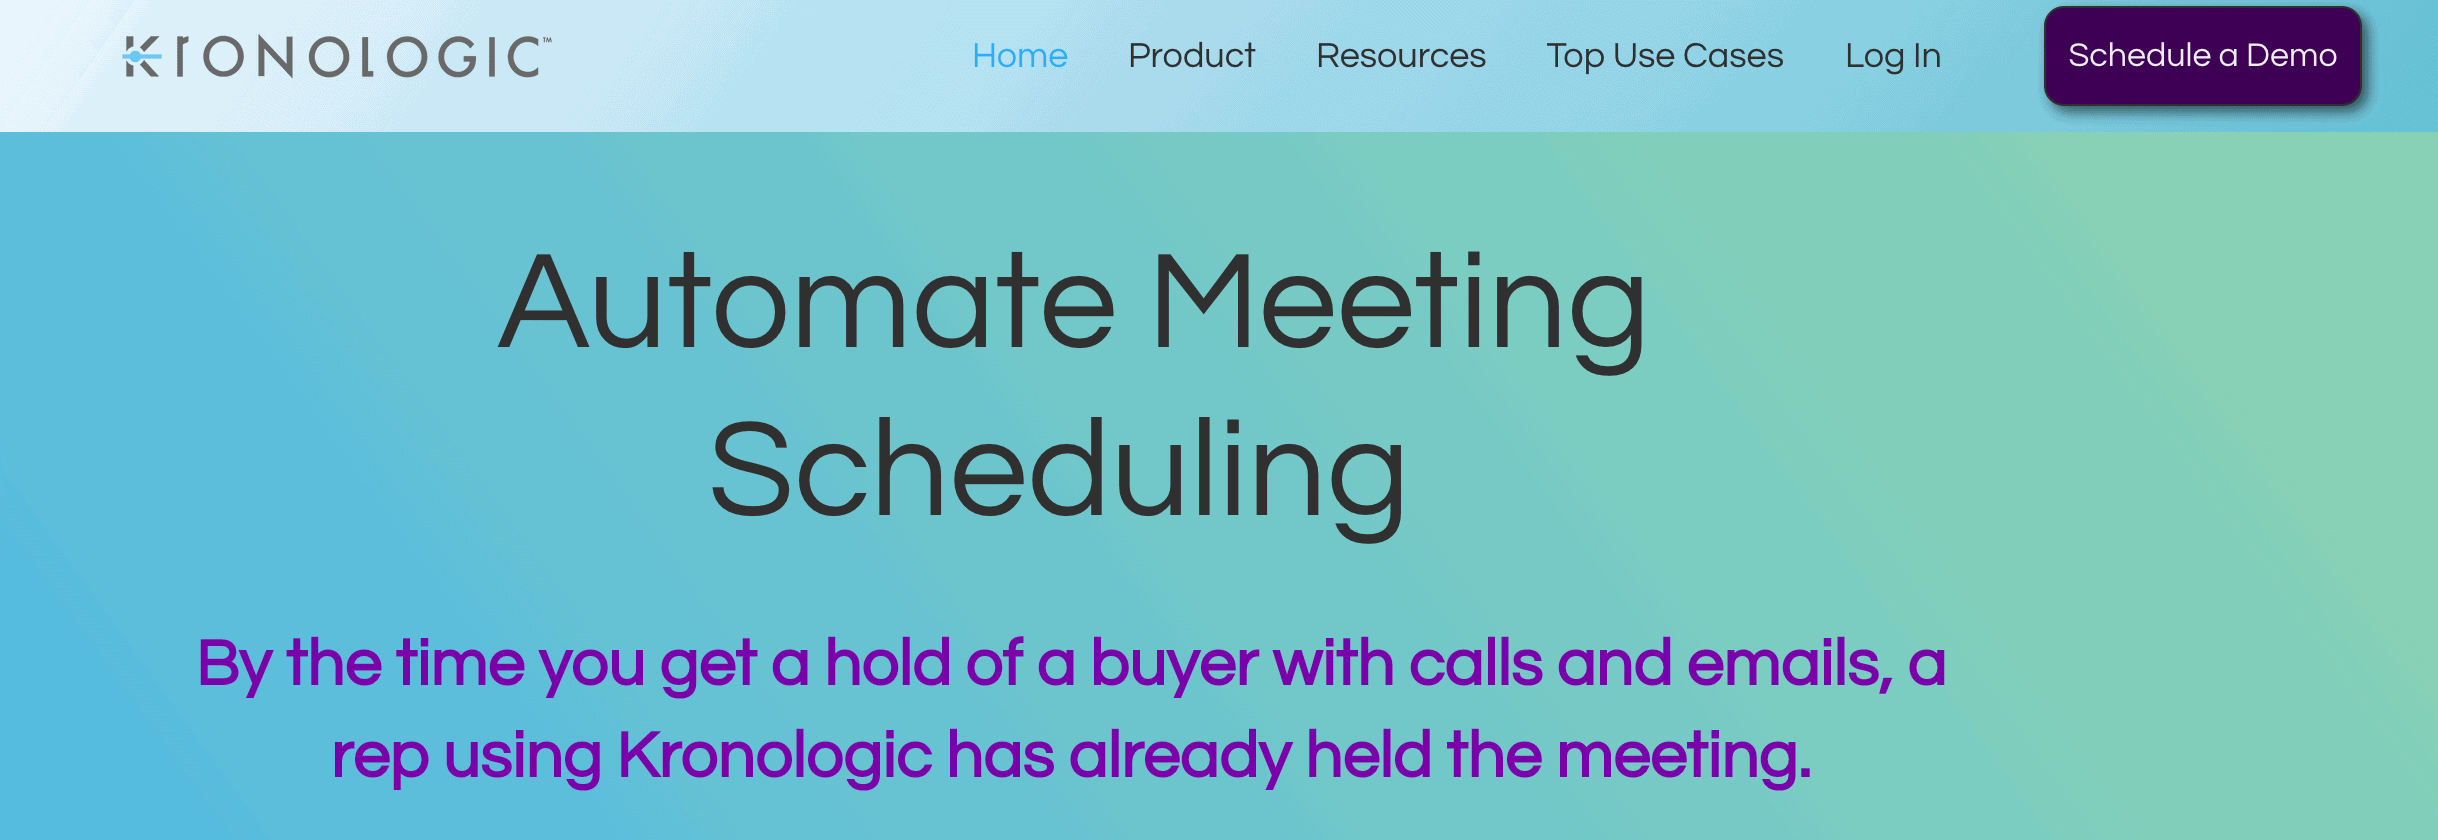 Kronologic homepage